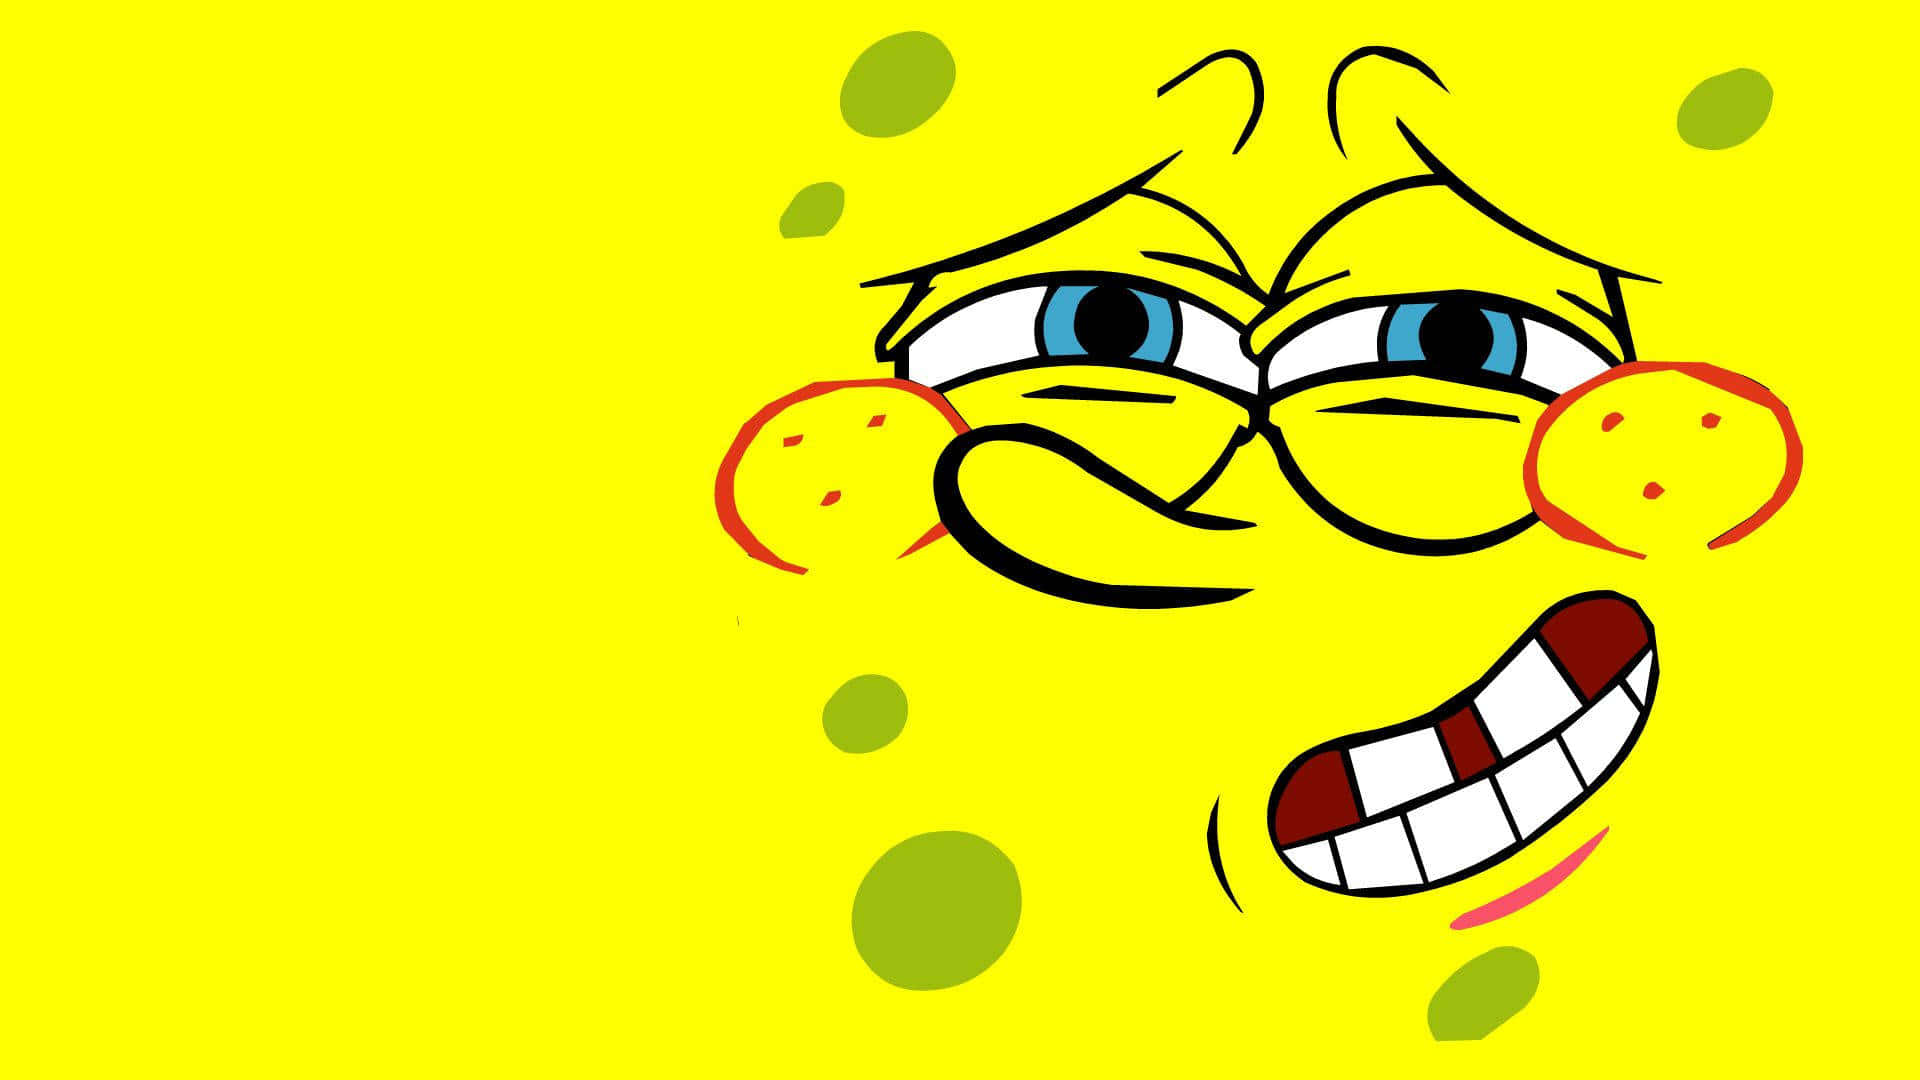 Ugly Spongebob looking grumpy